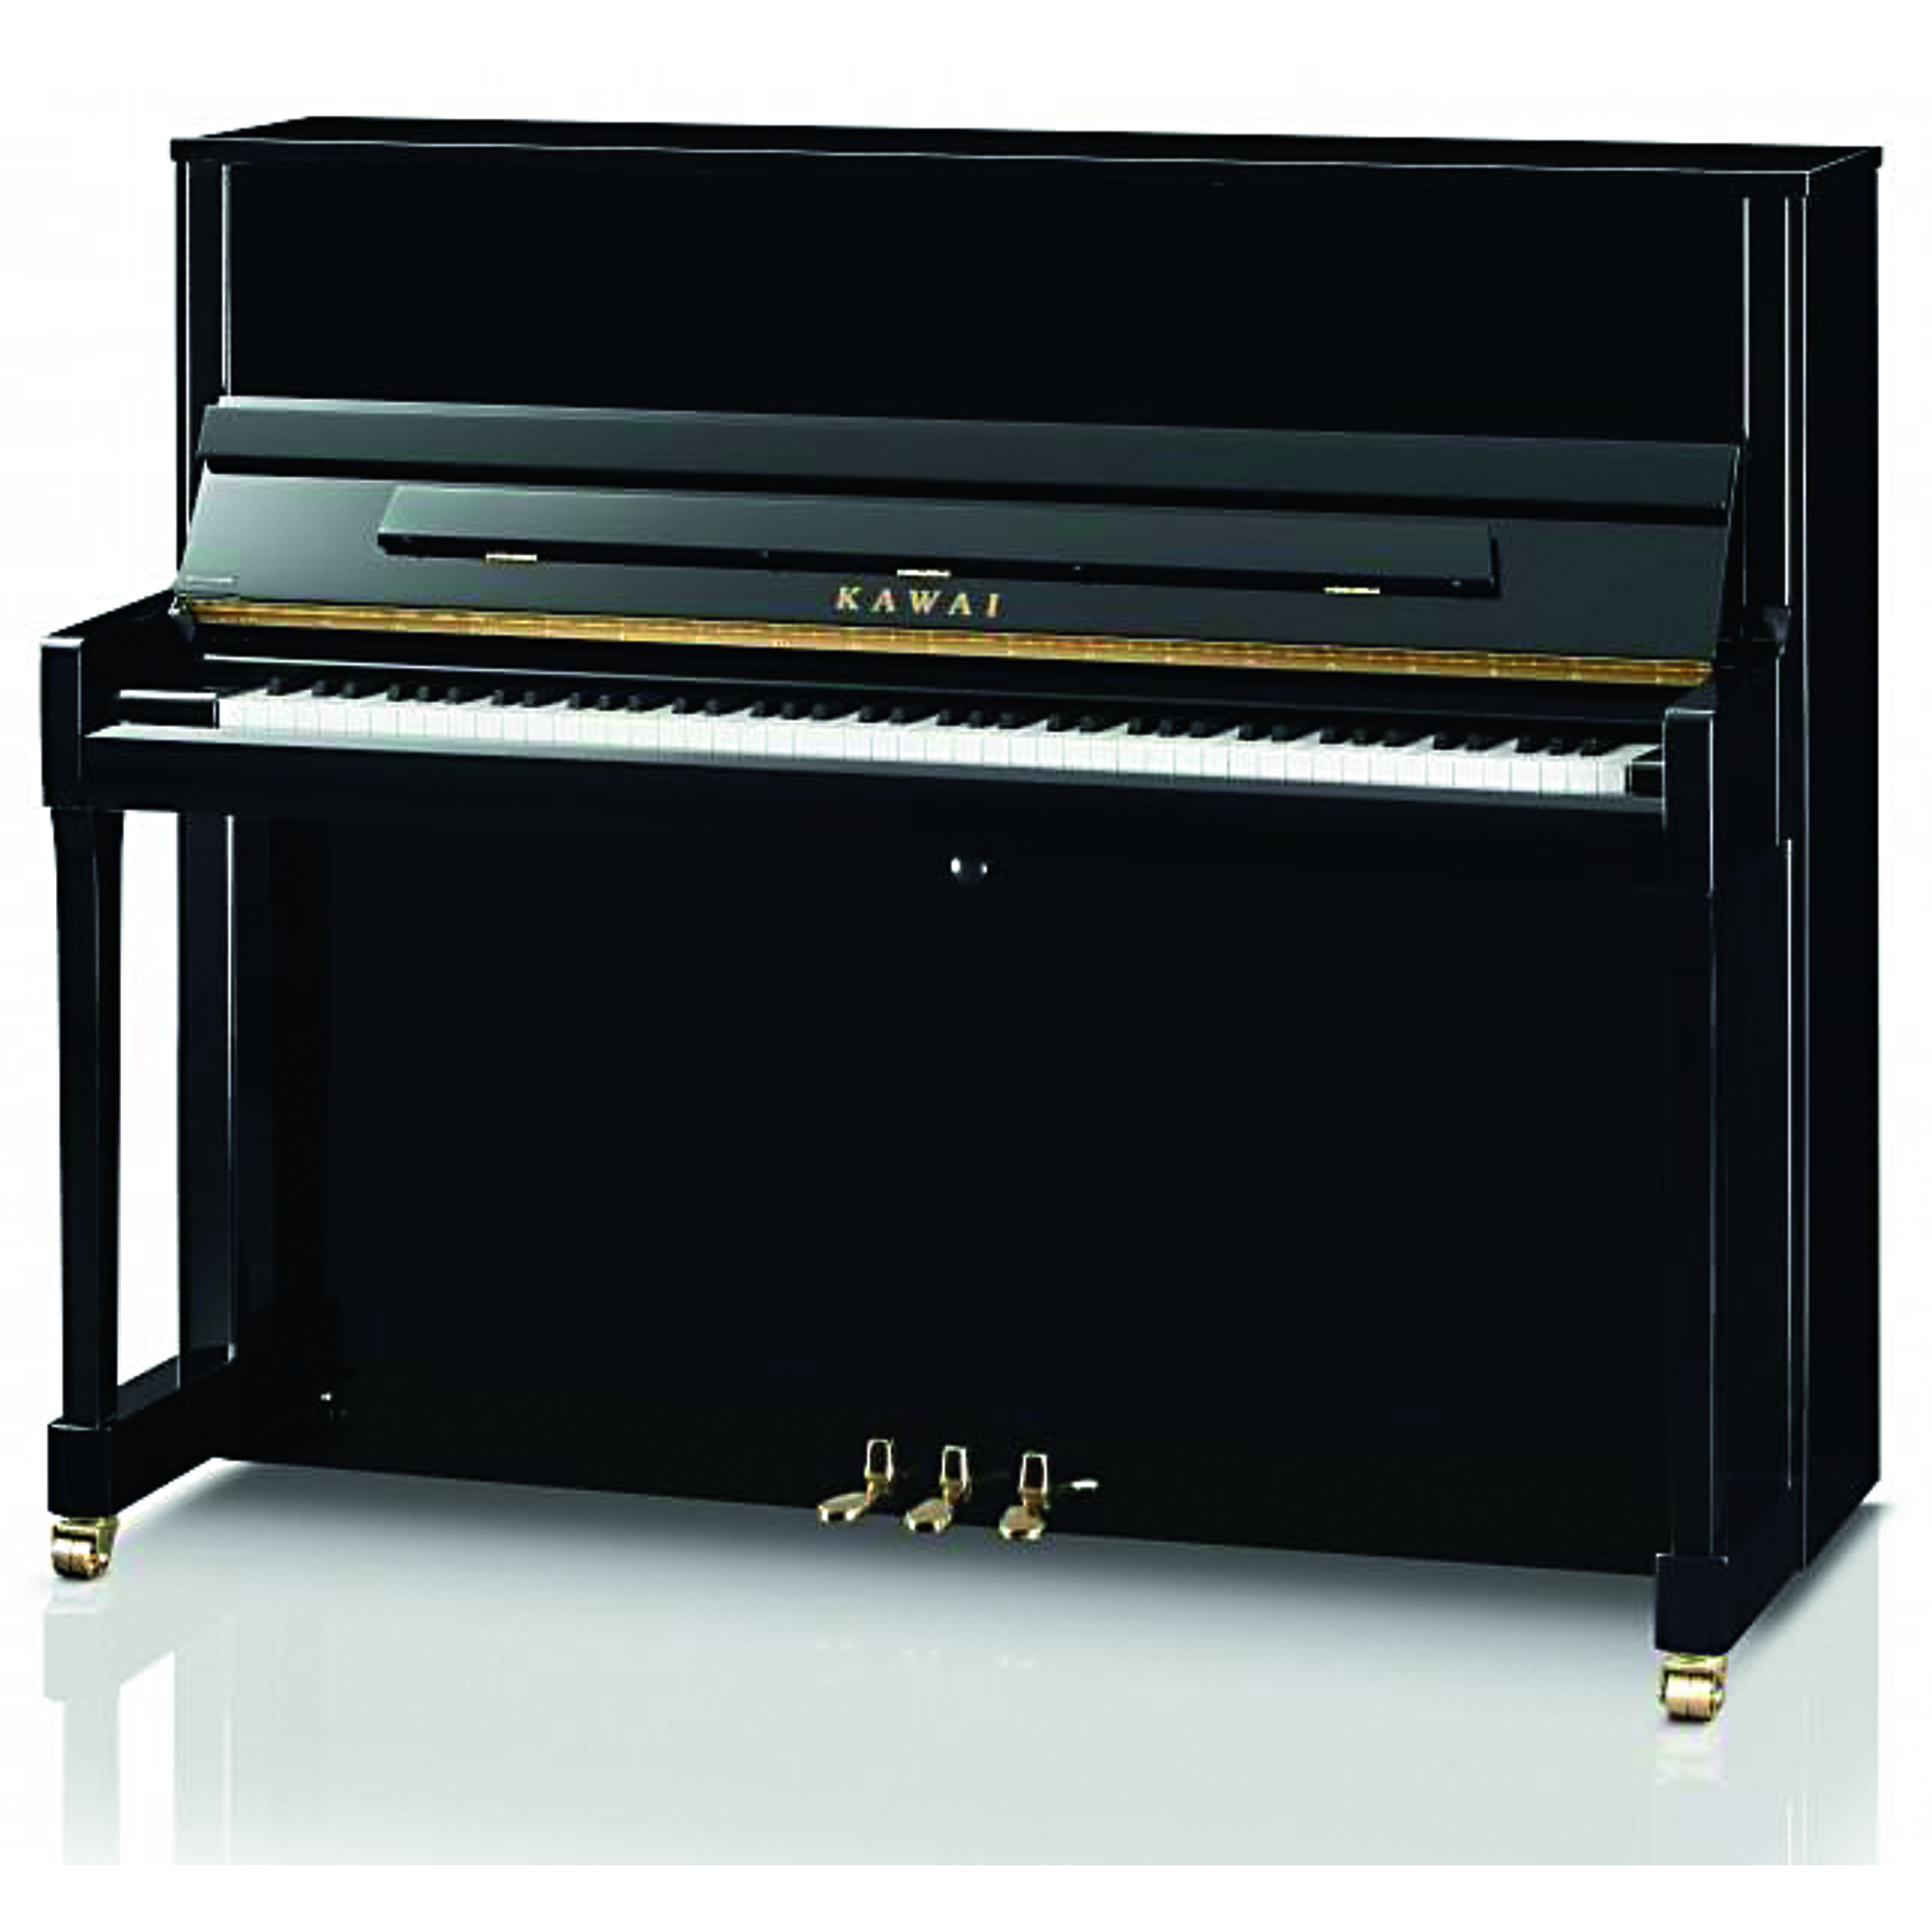 Kawai K 300 Upright Piano Polished Ebony